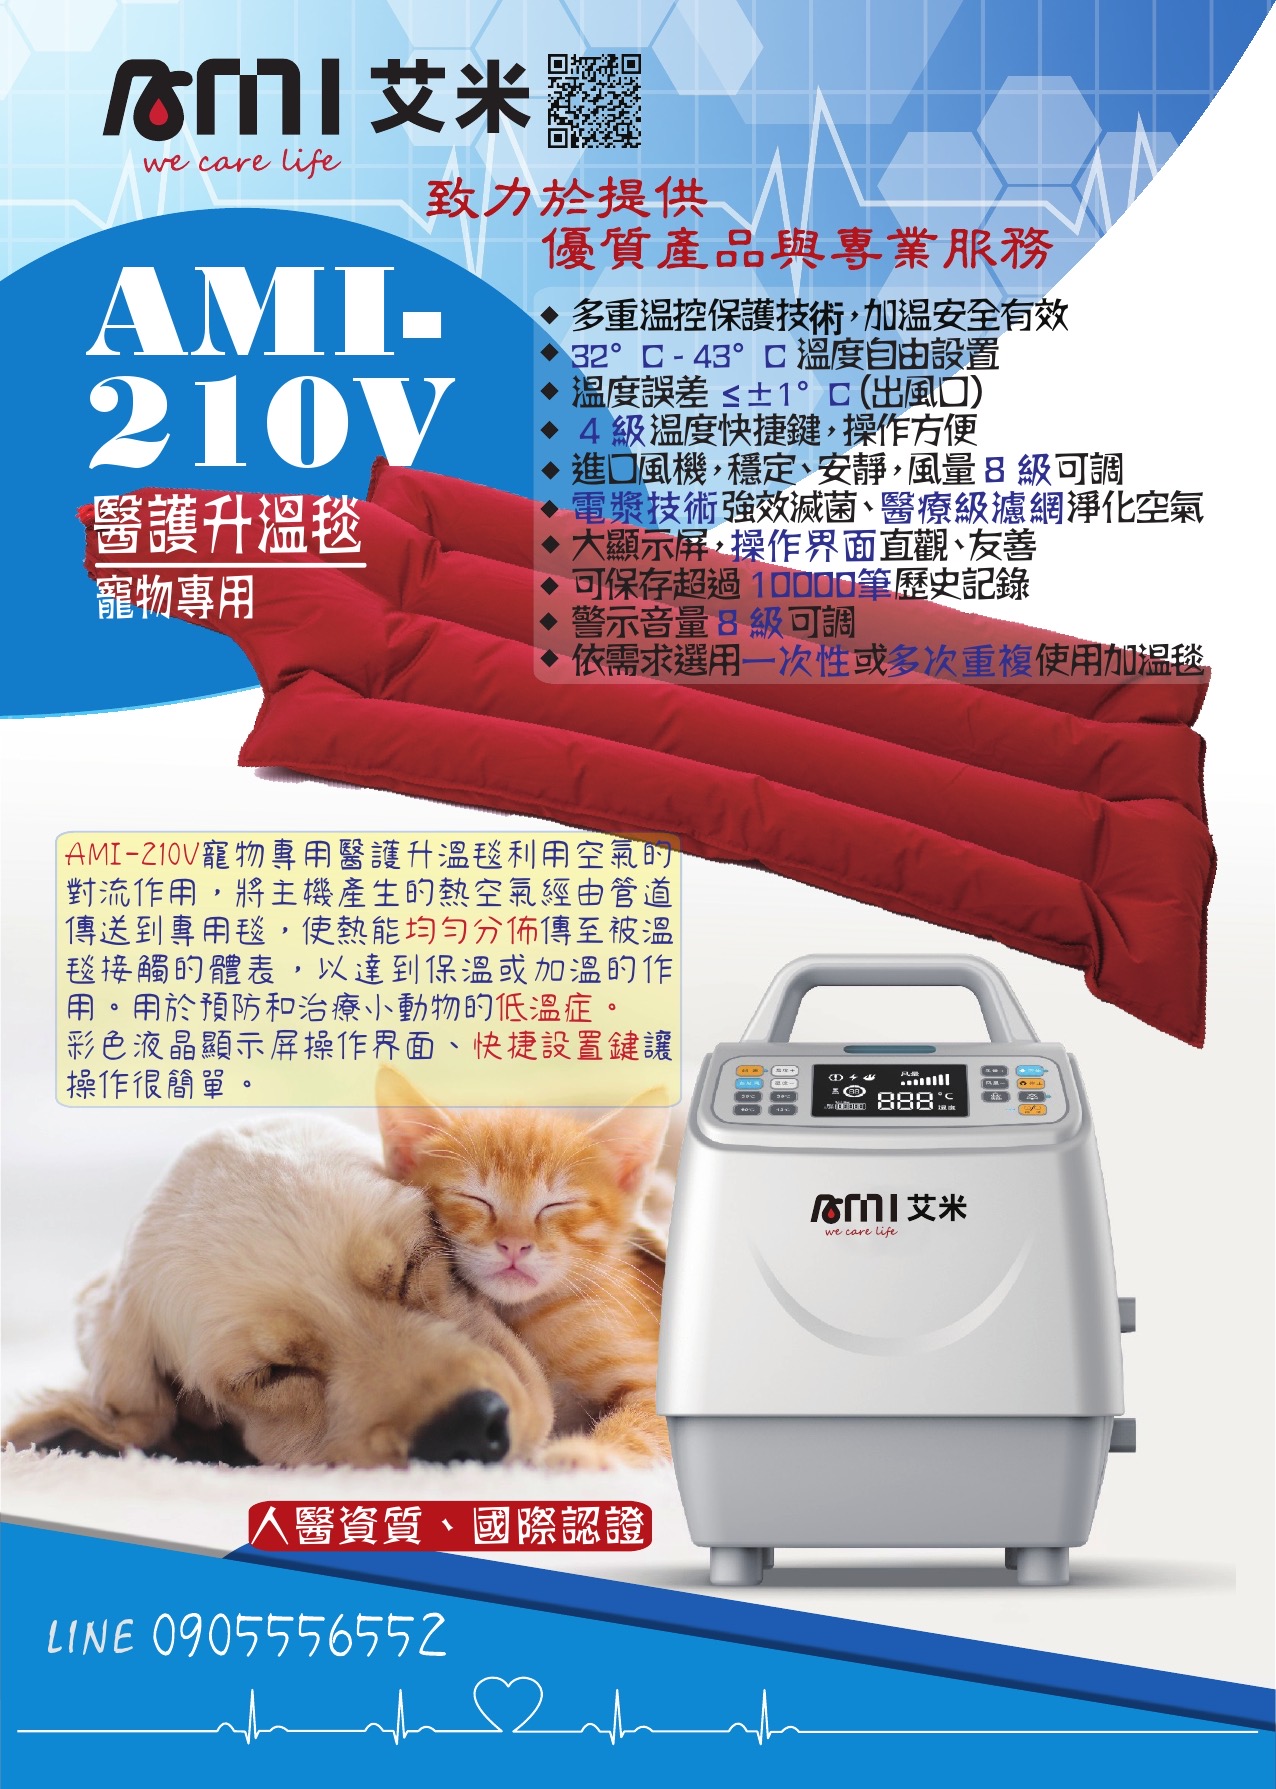 AMI-210V 寵物專用升溫毯